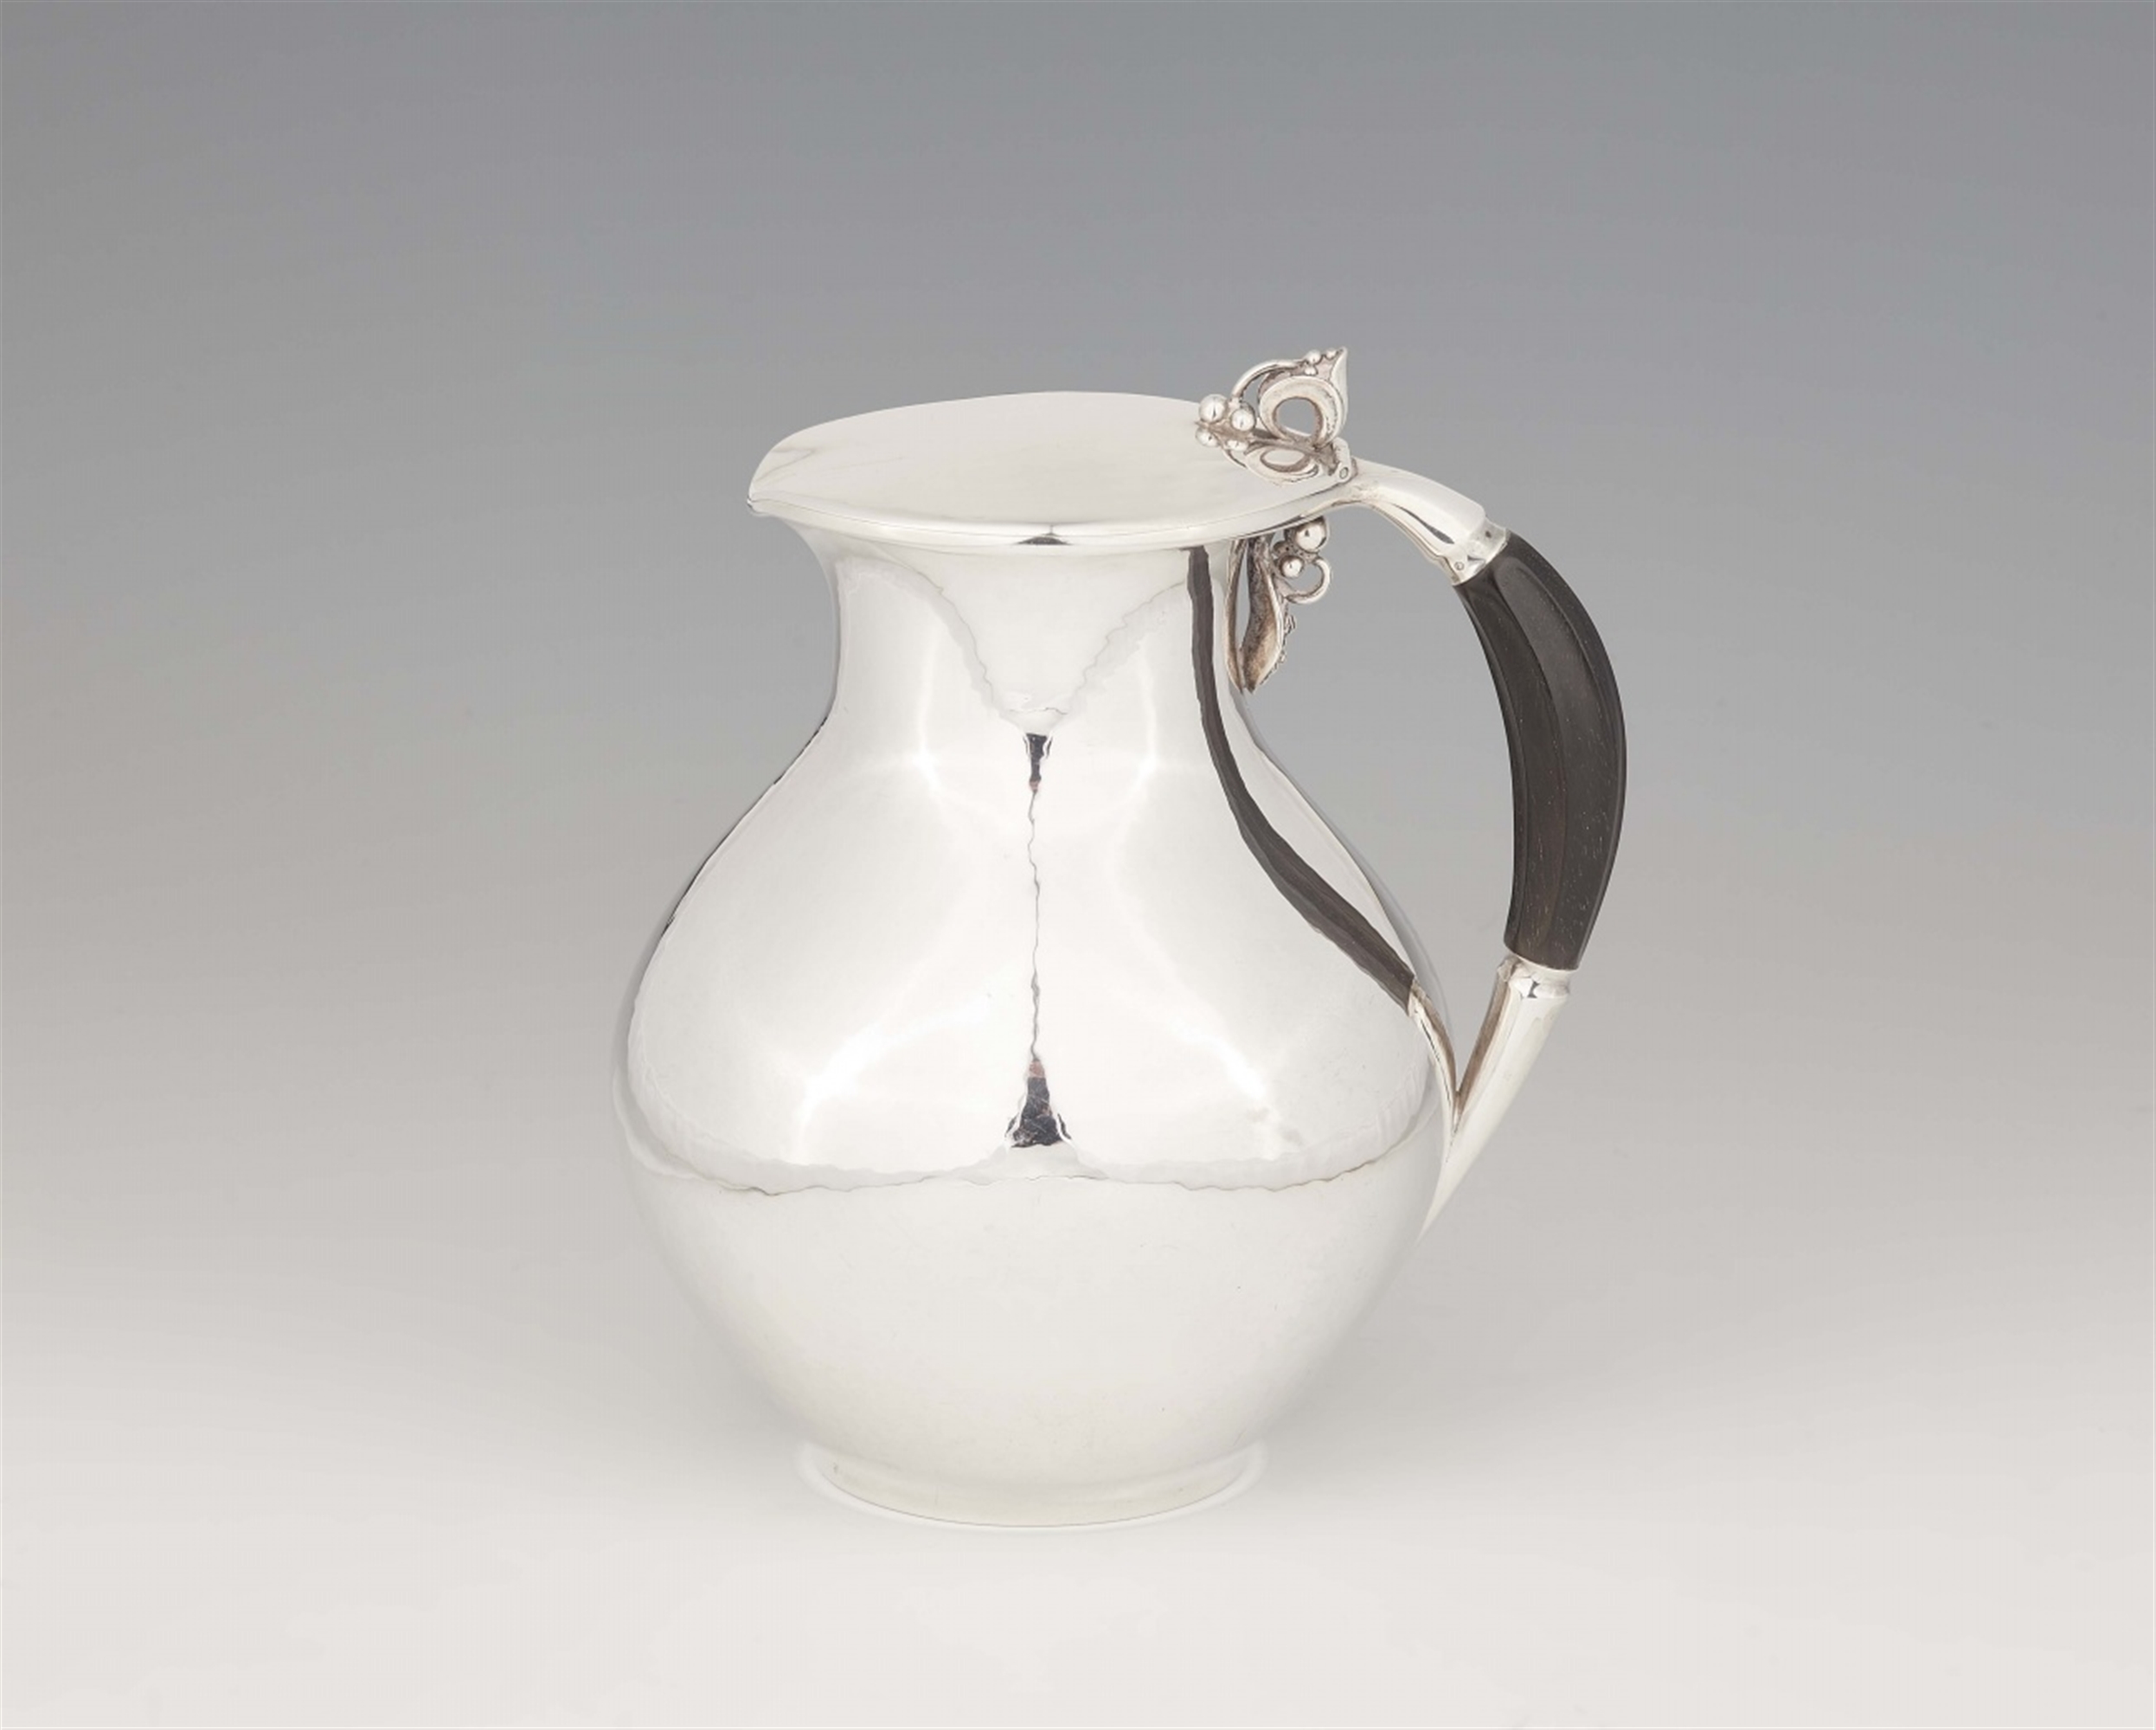 A Copenhagen silver pitcher by Georg Jensen, model no. 385